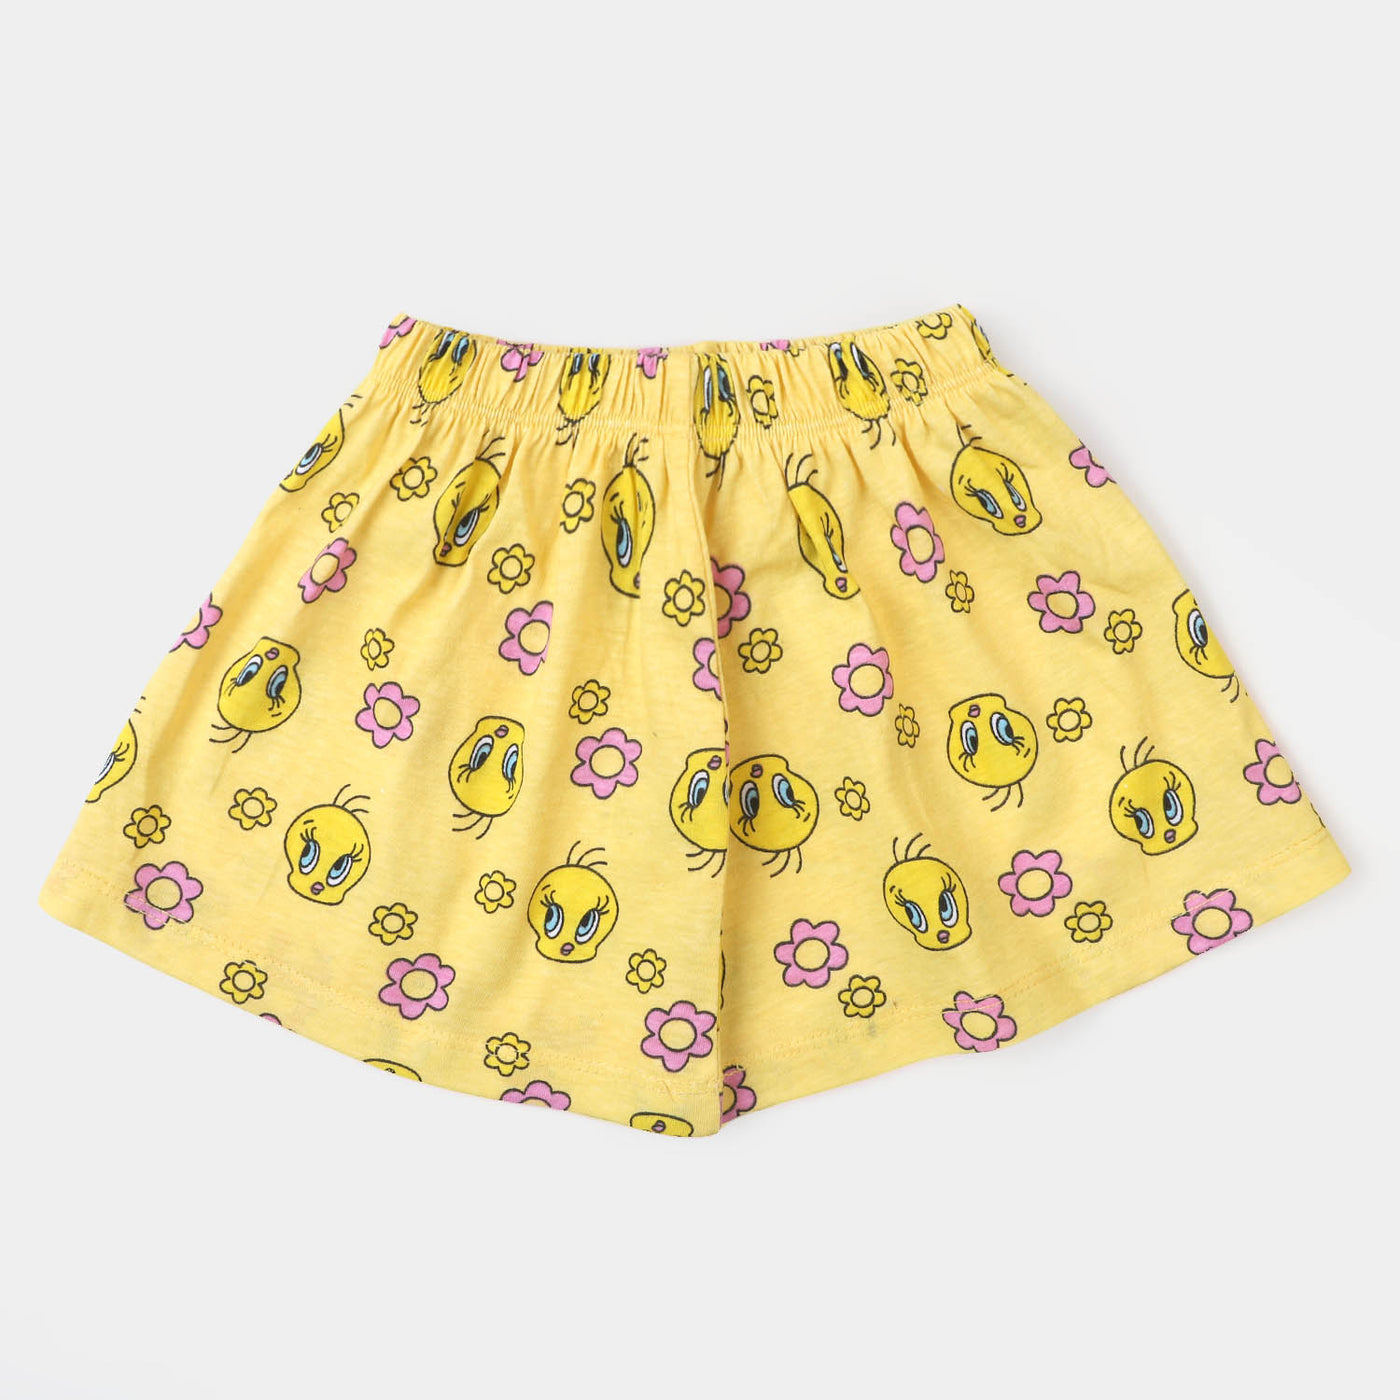 Infant Girls Knitted Cotton Skirt Character - Beige